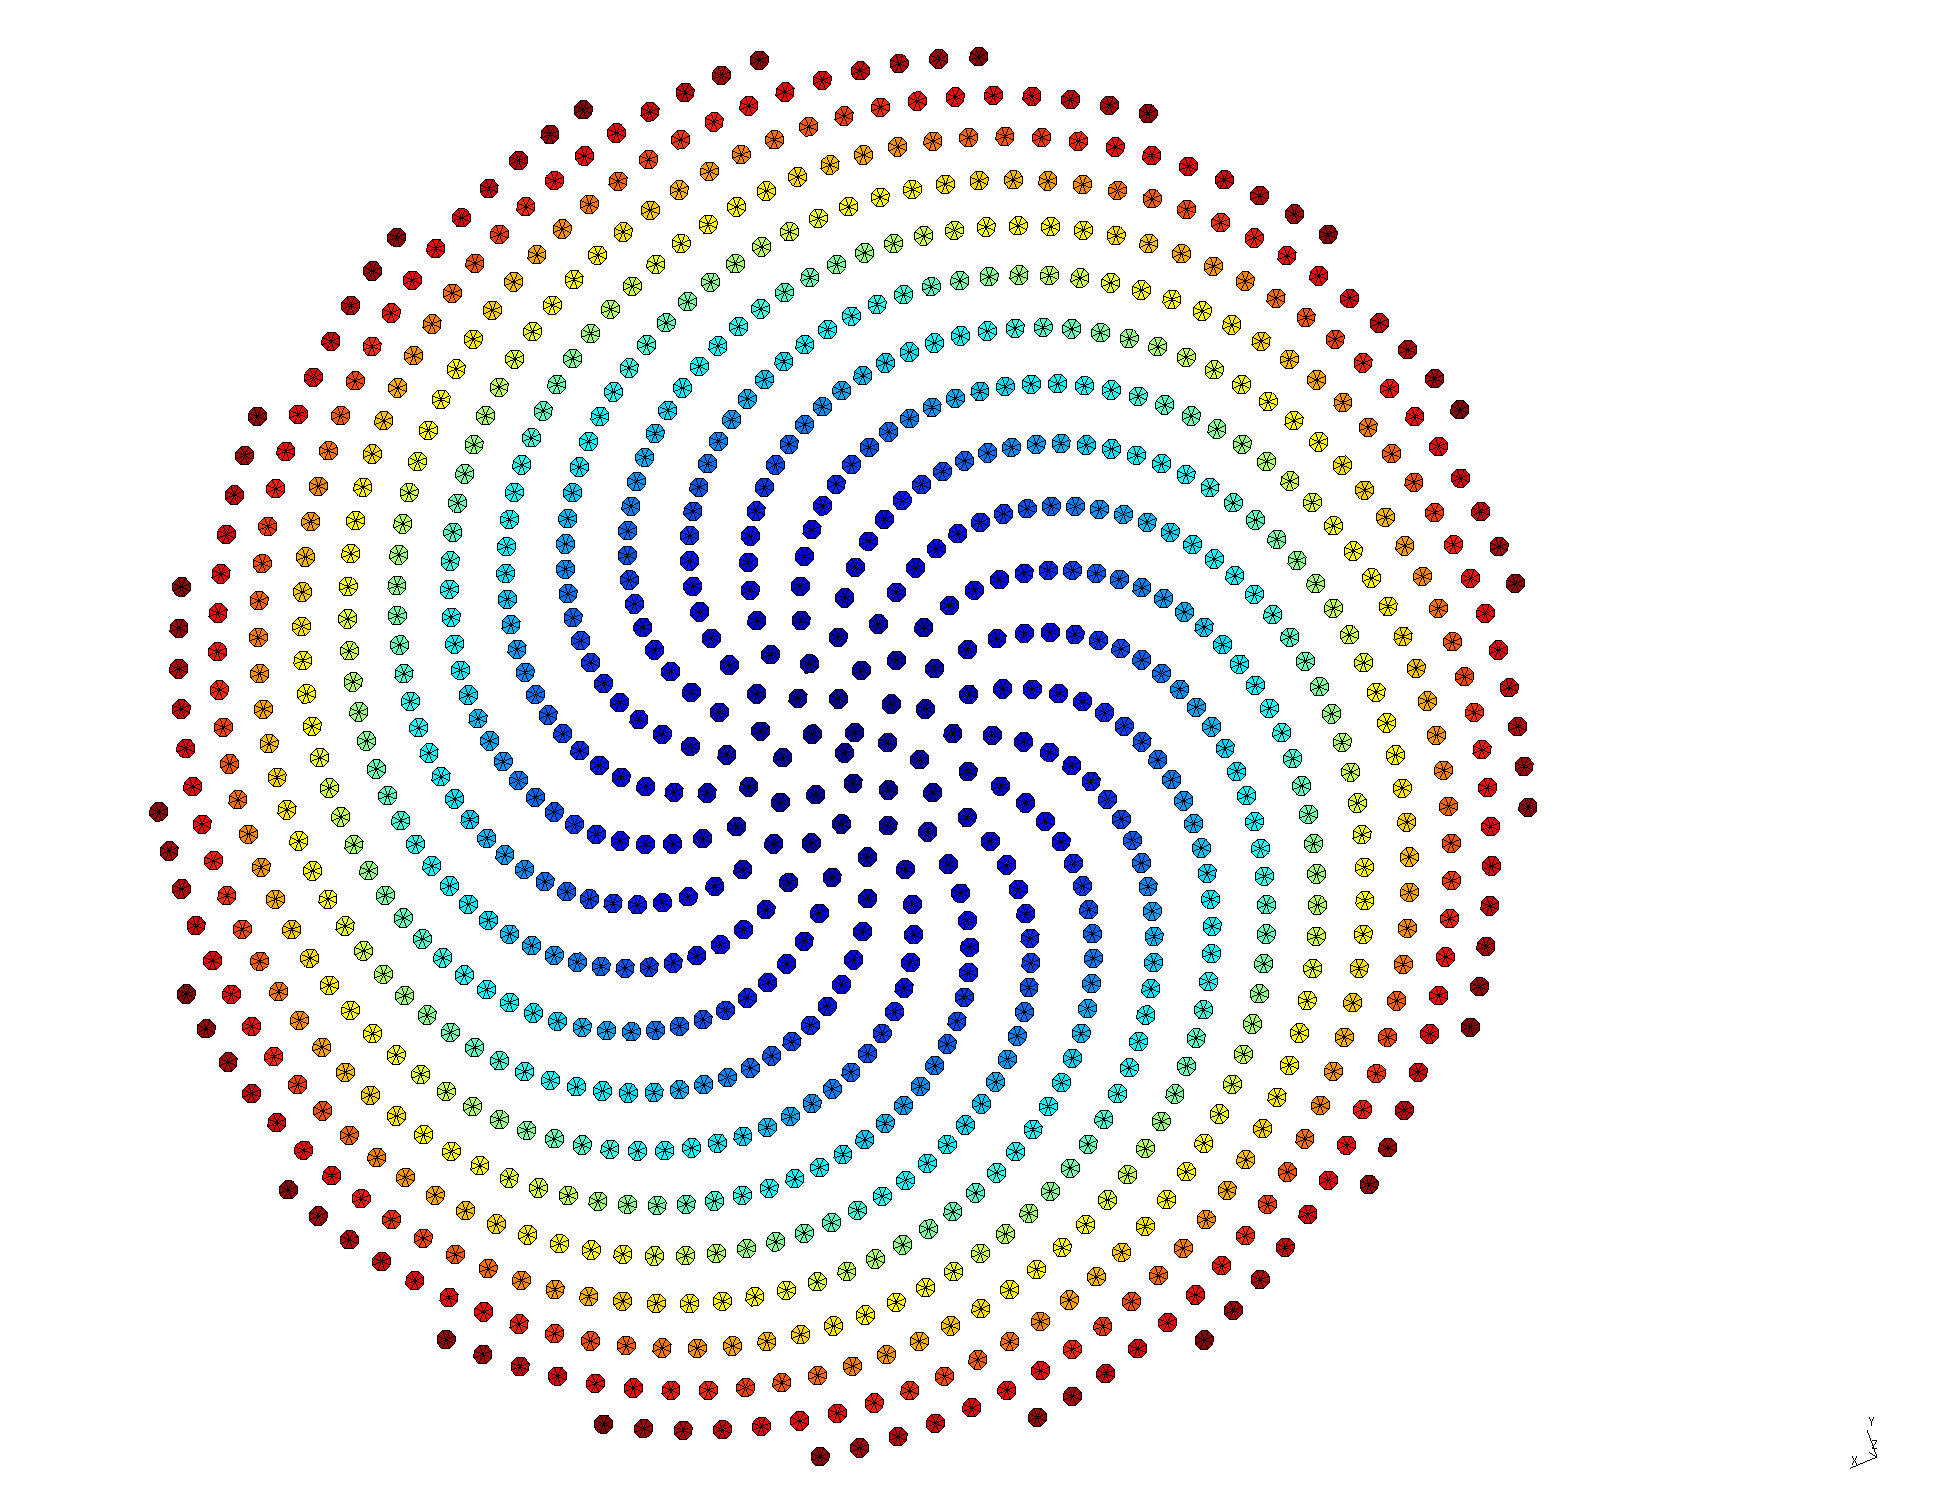 A1 Spiral diffraction pattern